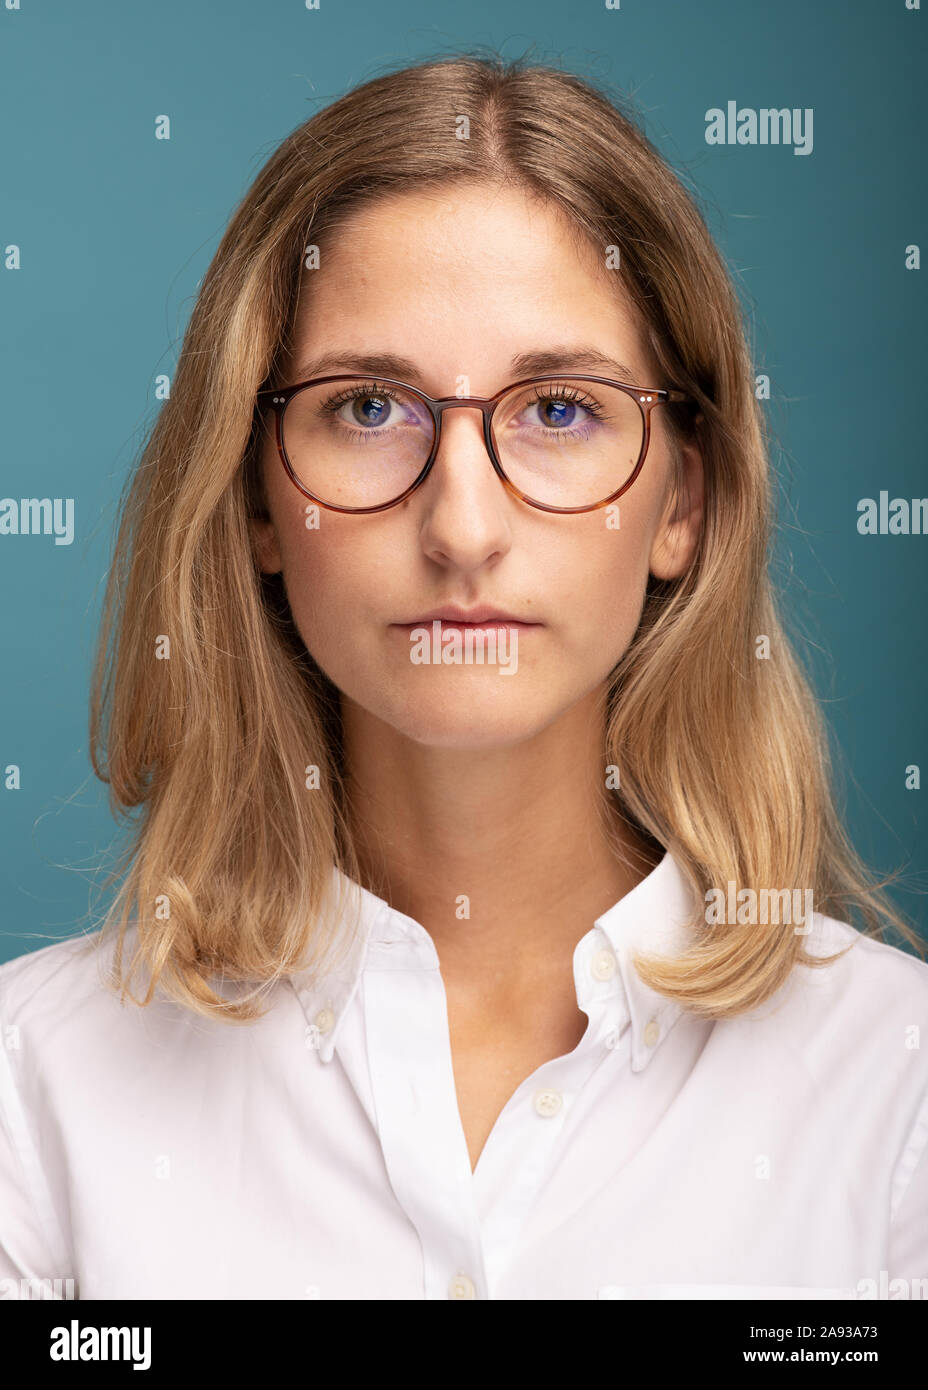 Portrait of woman wearing glasses Stock Photo